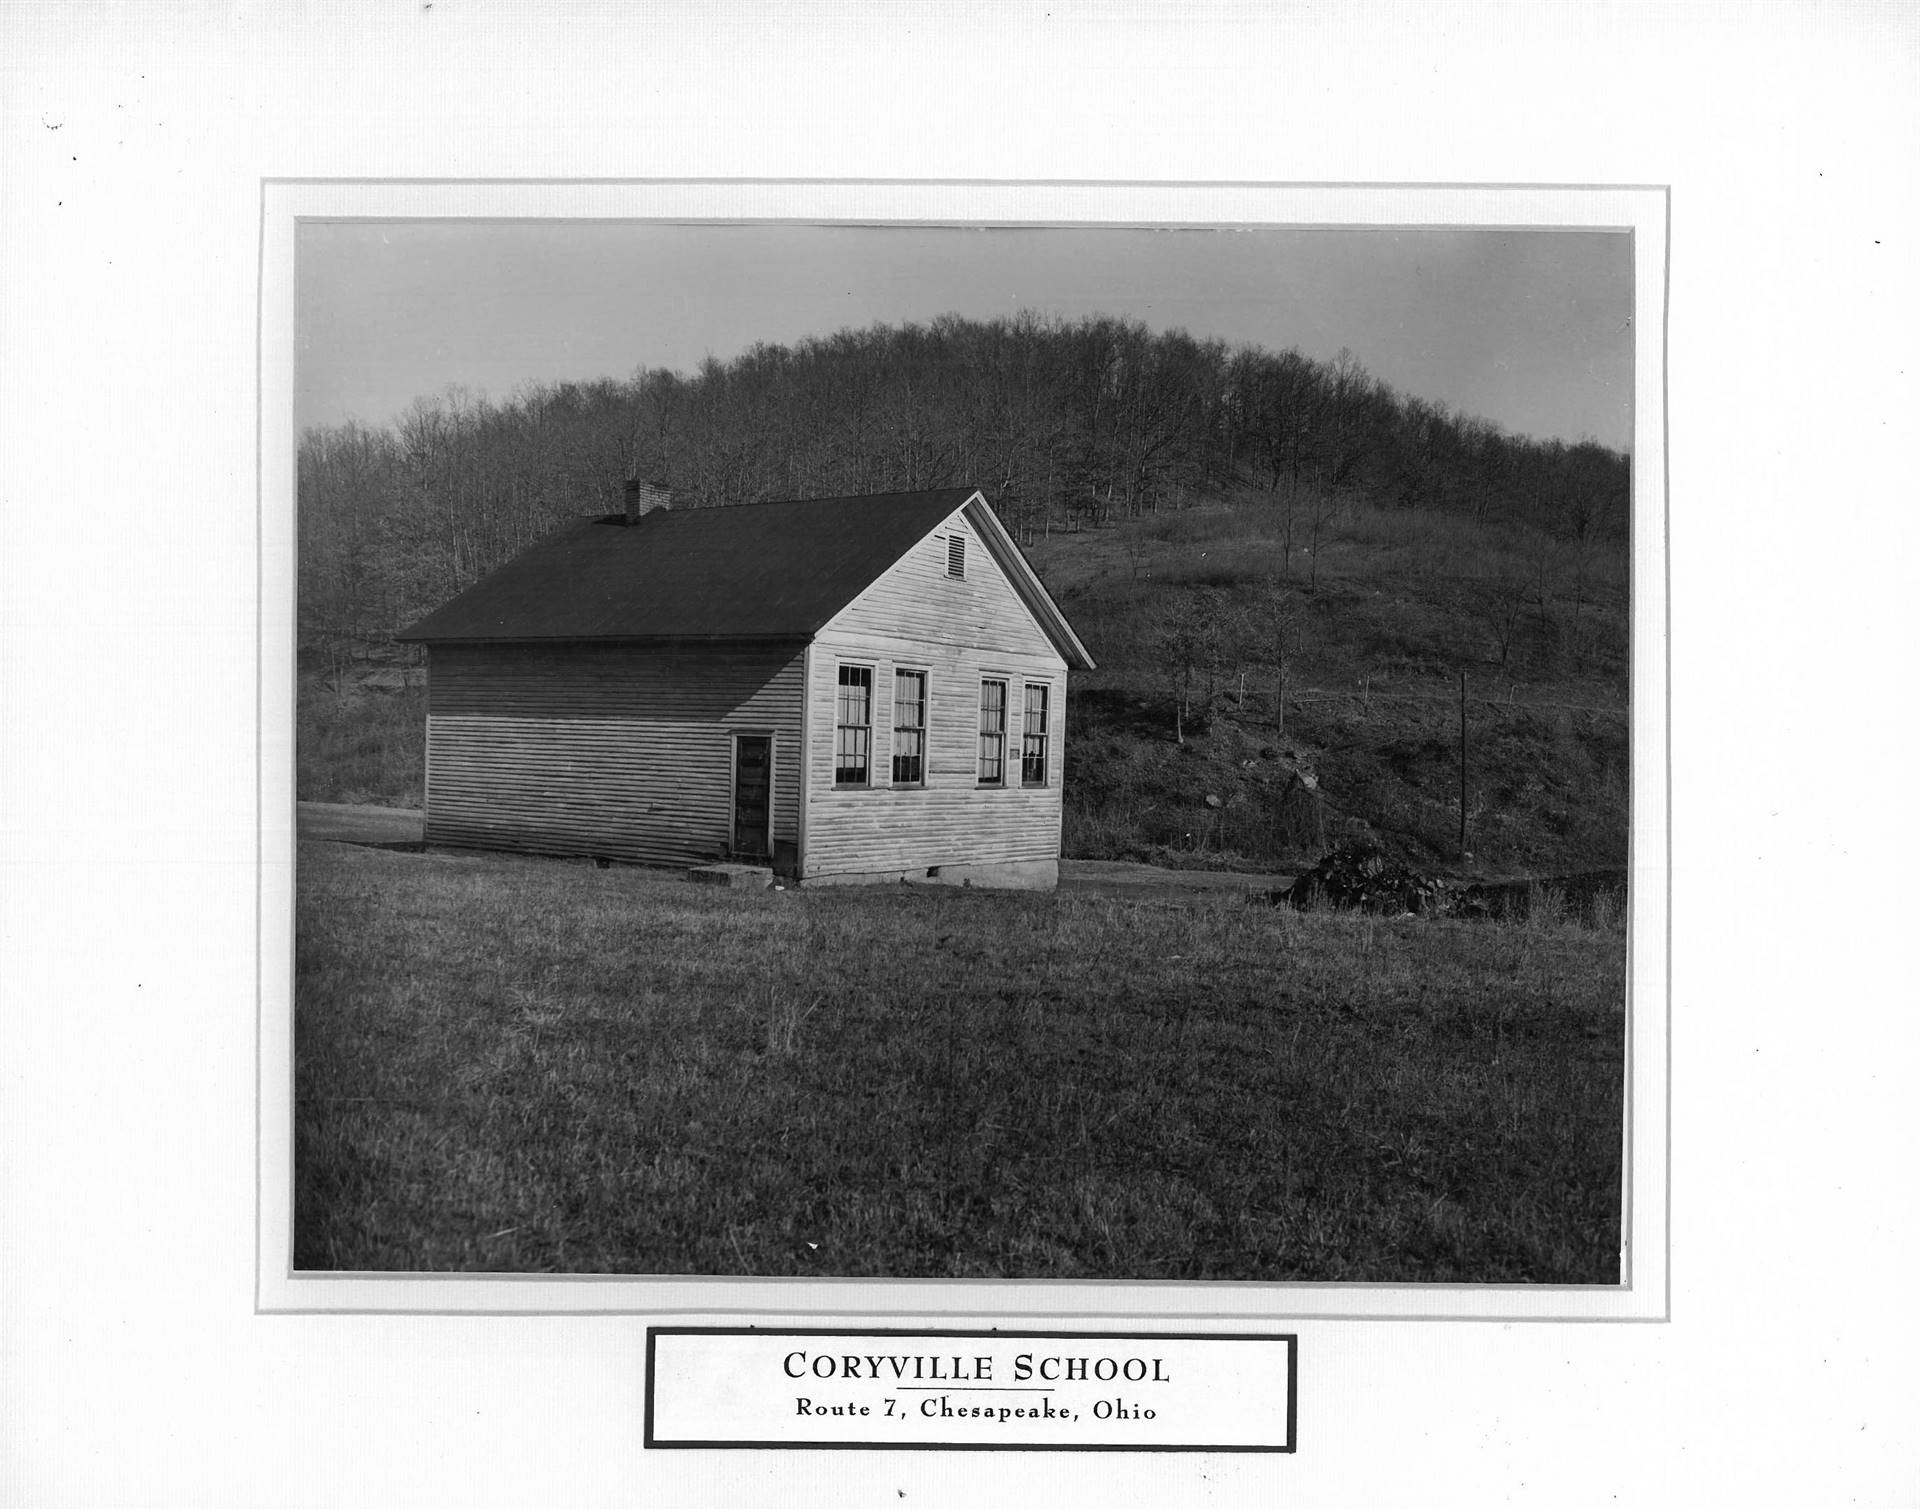 Coryville School - Route 7, Chesapeake, Ohio